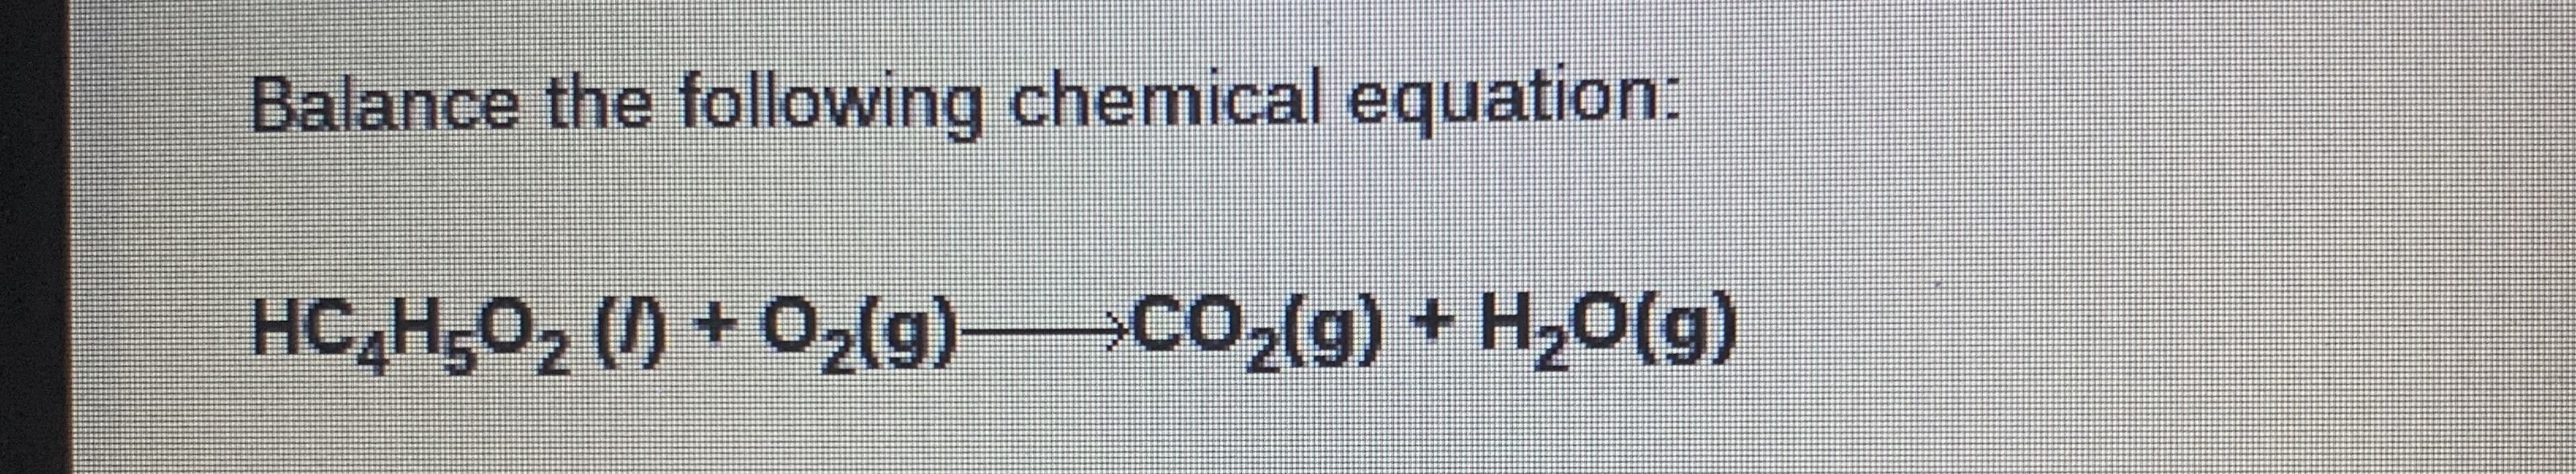 Balance the following chemical equation:
HC H5O2 () + 02(g)>CO2(g) + H,0(g)
